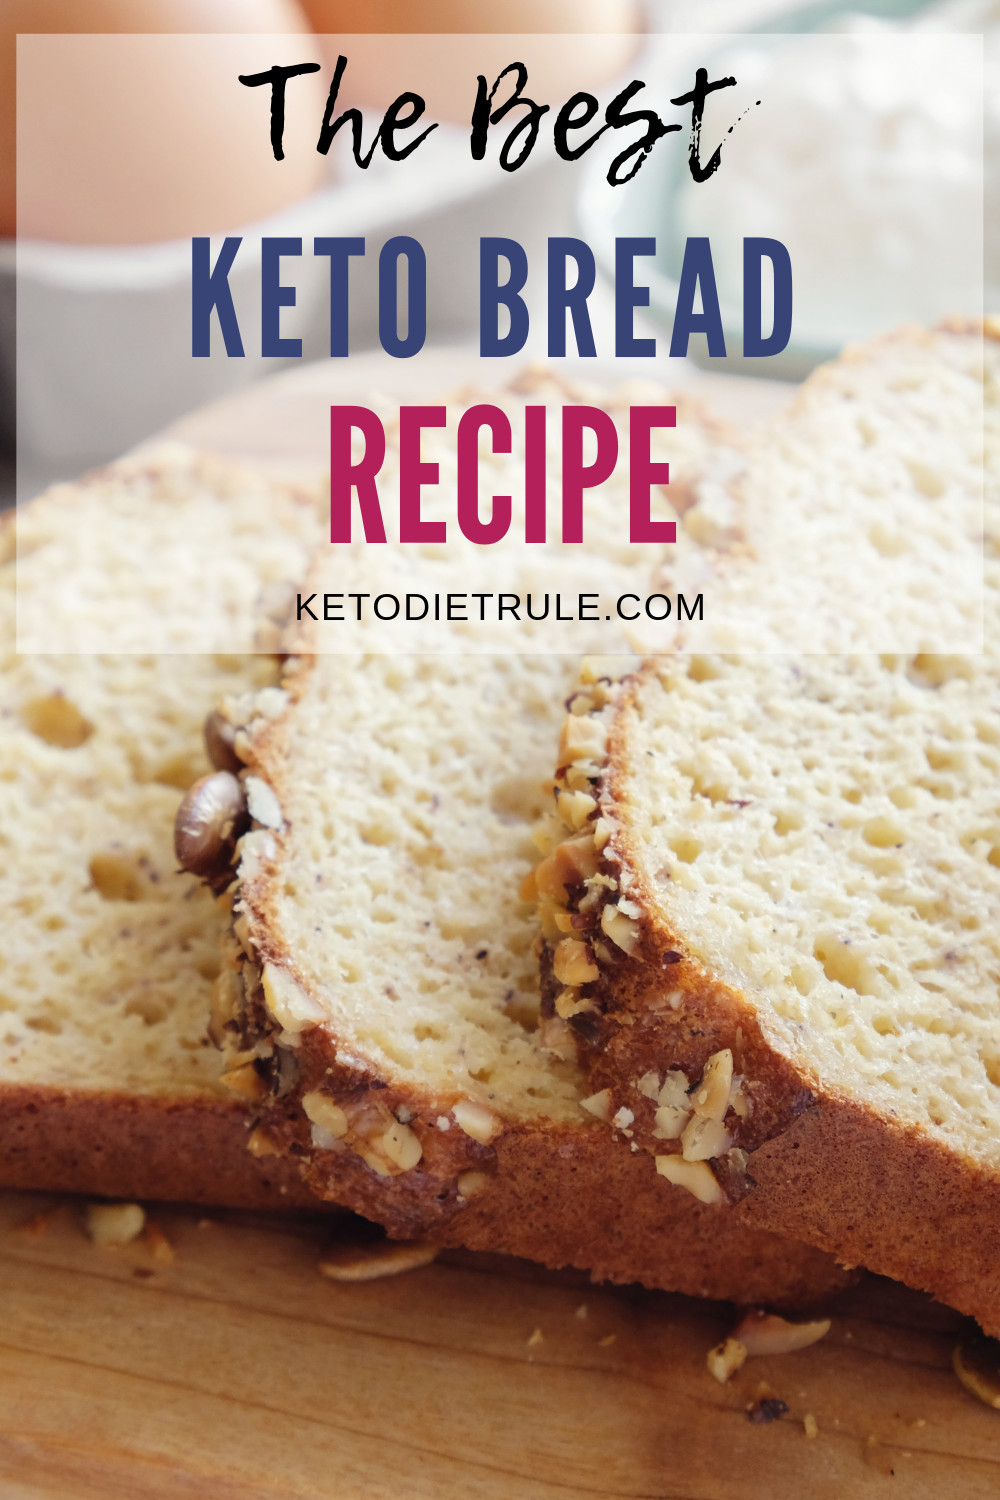 Keto Banana Bread Almond Flour
 Almond Flour Low Carb Bread for the Keto Diet